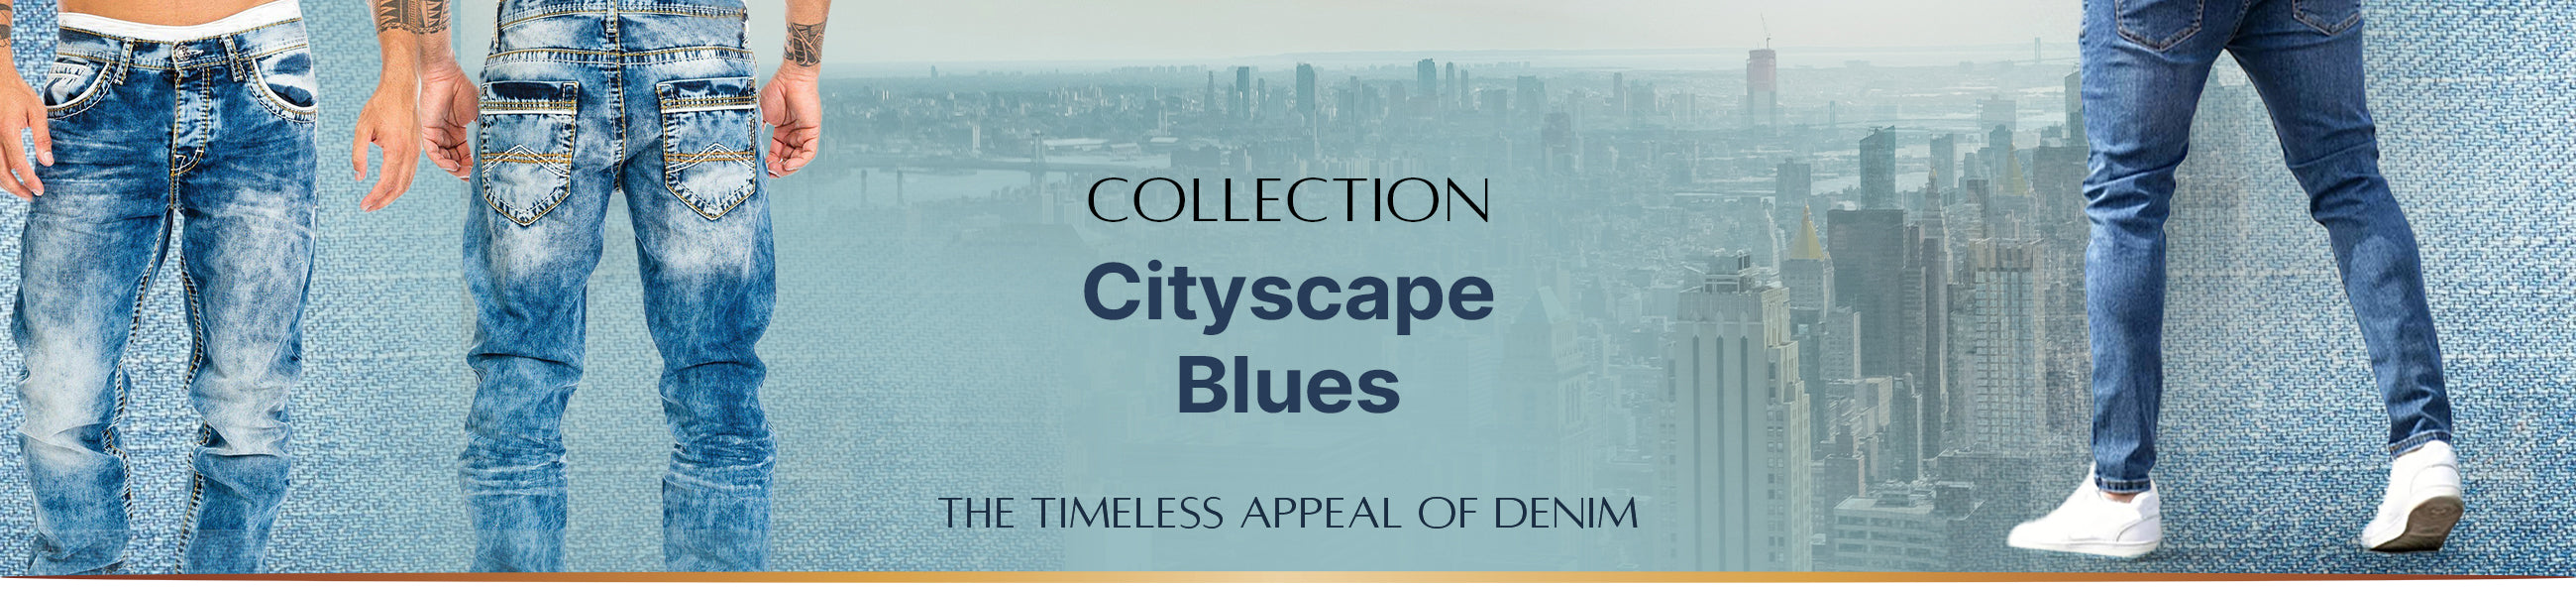 Cityscape Blues DESKTOP_BANNER.jpg__PID:b9eafb49-42c8-449f-a930-1820fb0fe886